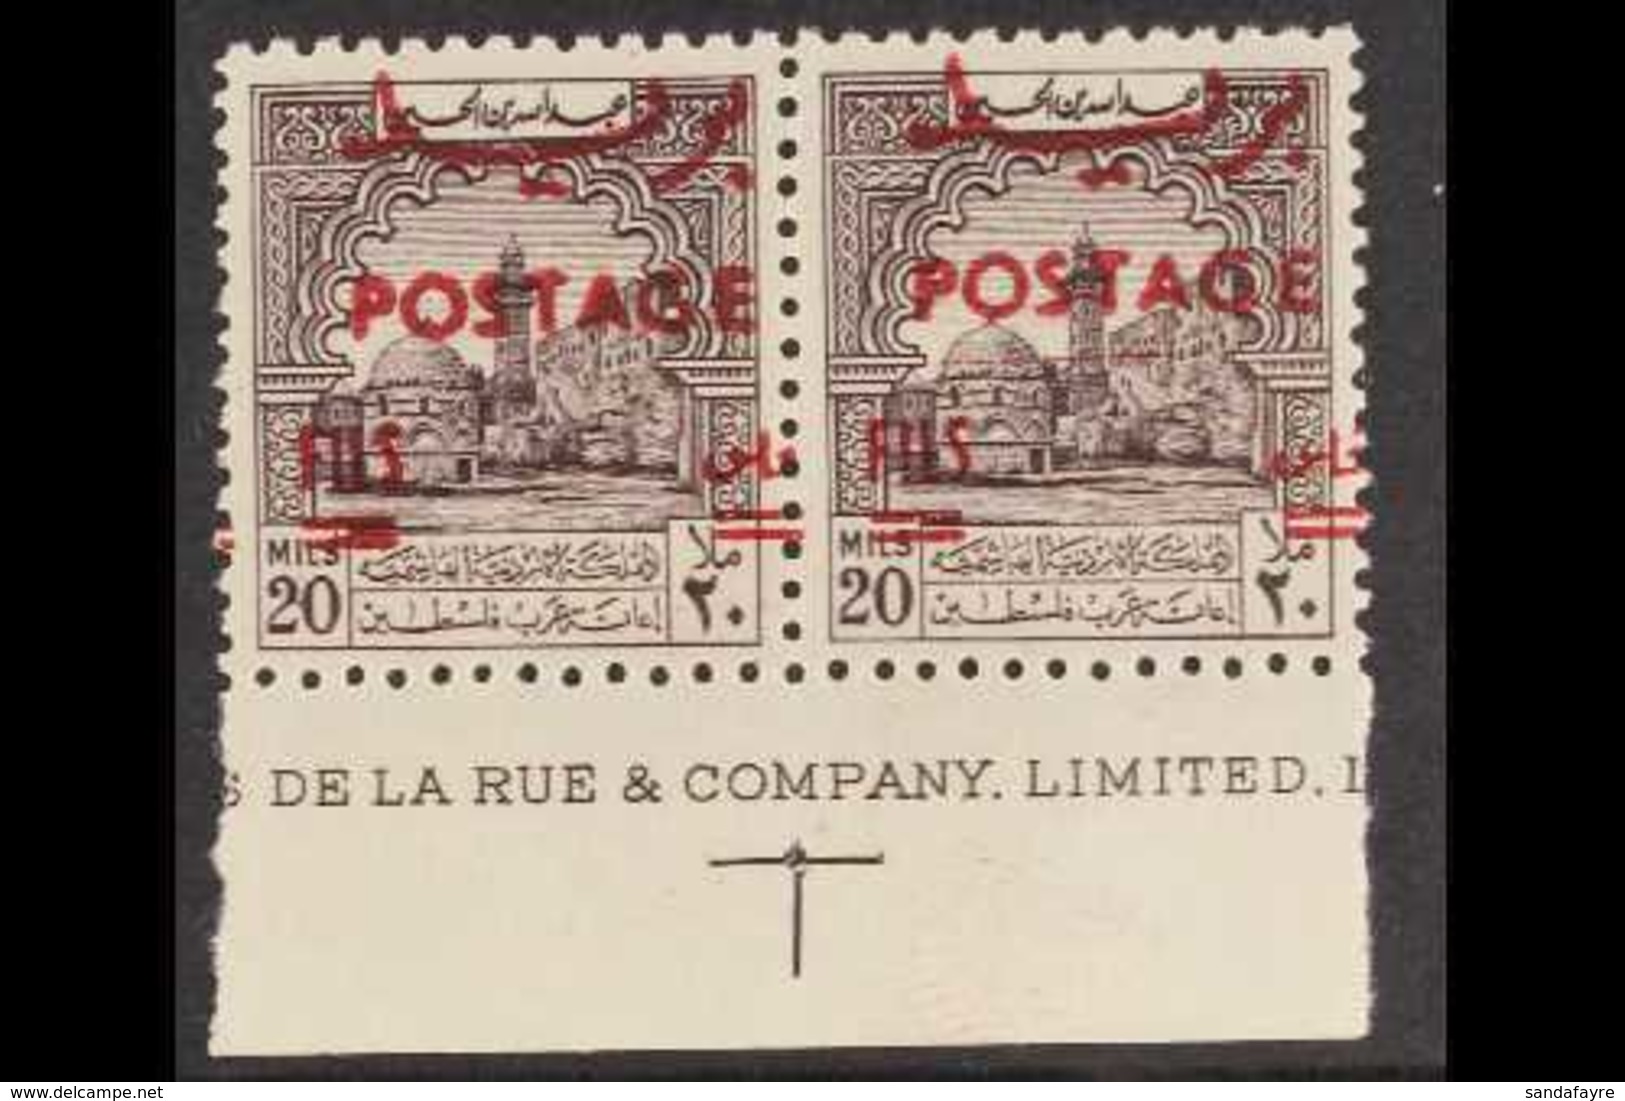 1953-56 20f On 20m Purple-brown "POSTAGE" Overprint, SG 406, Superb Never Hinged Mint Lower Marginal Horizontal PAIR Wit - Jordanien